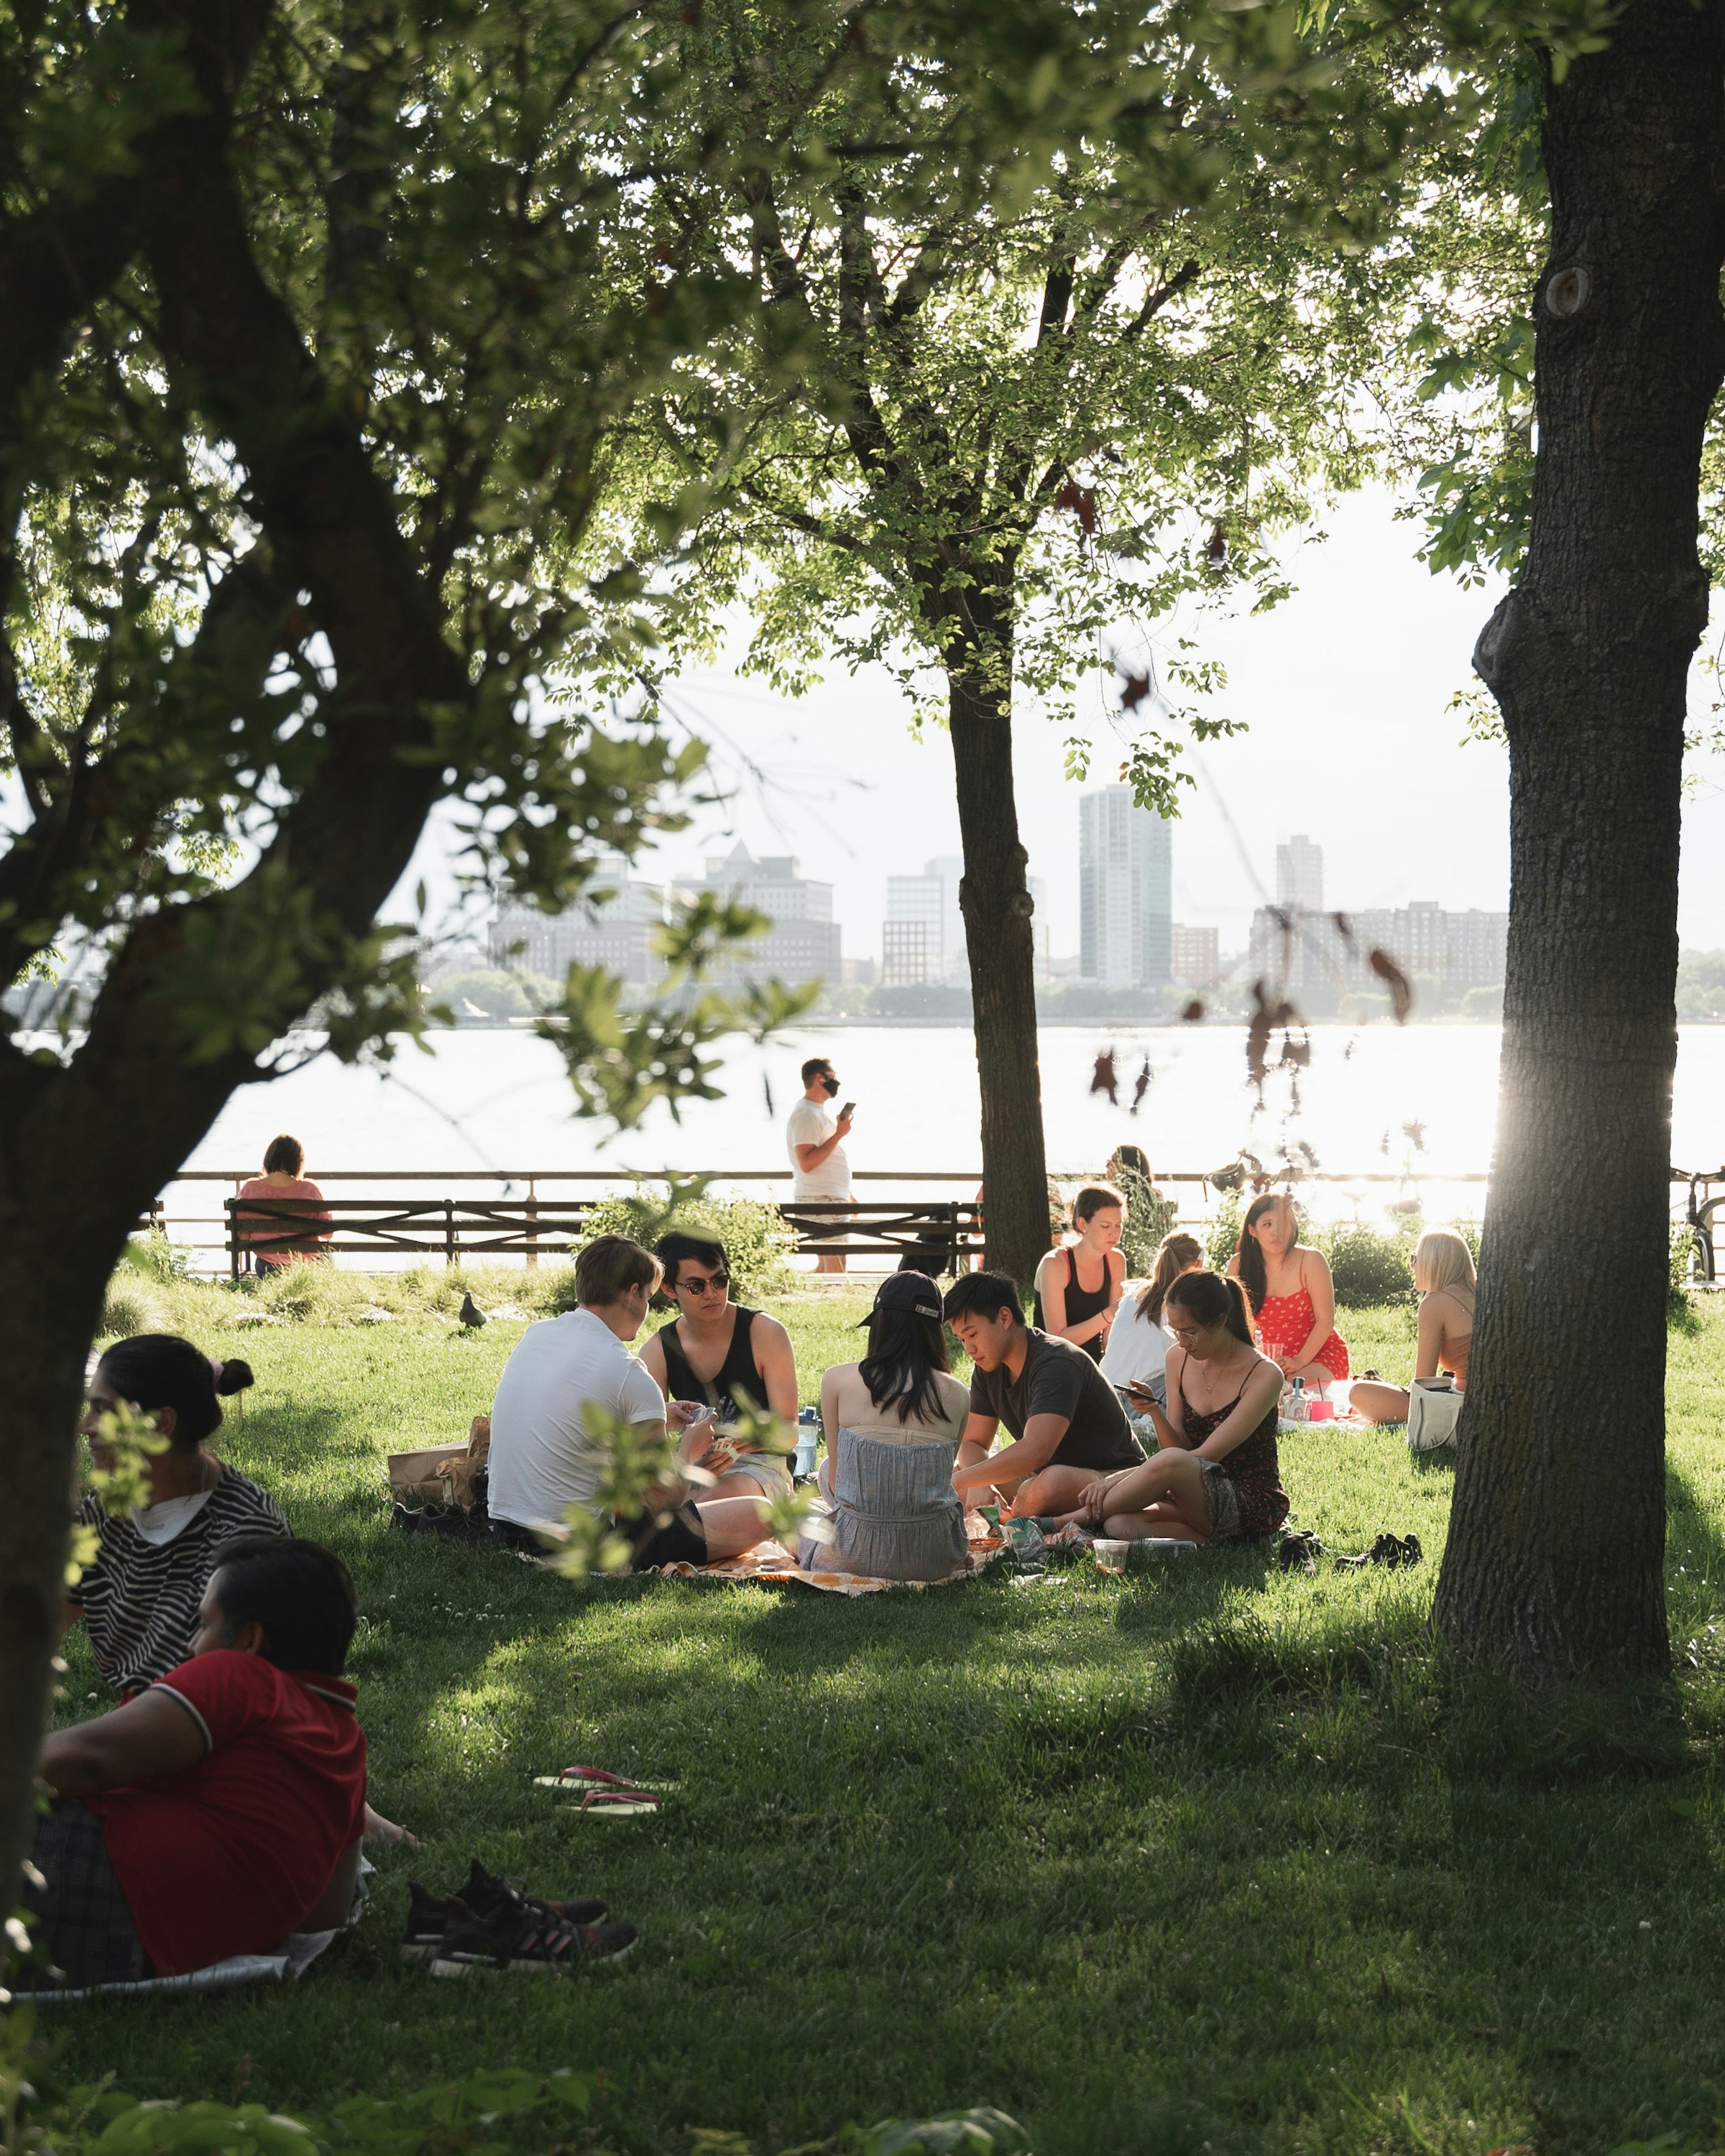 People having a picnic | Source: Unsplash